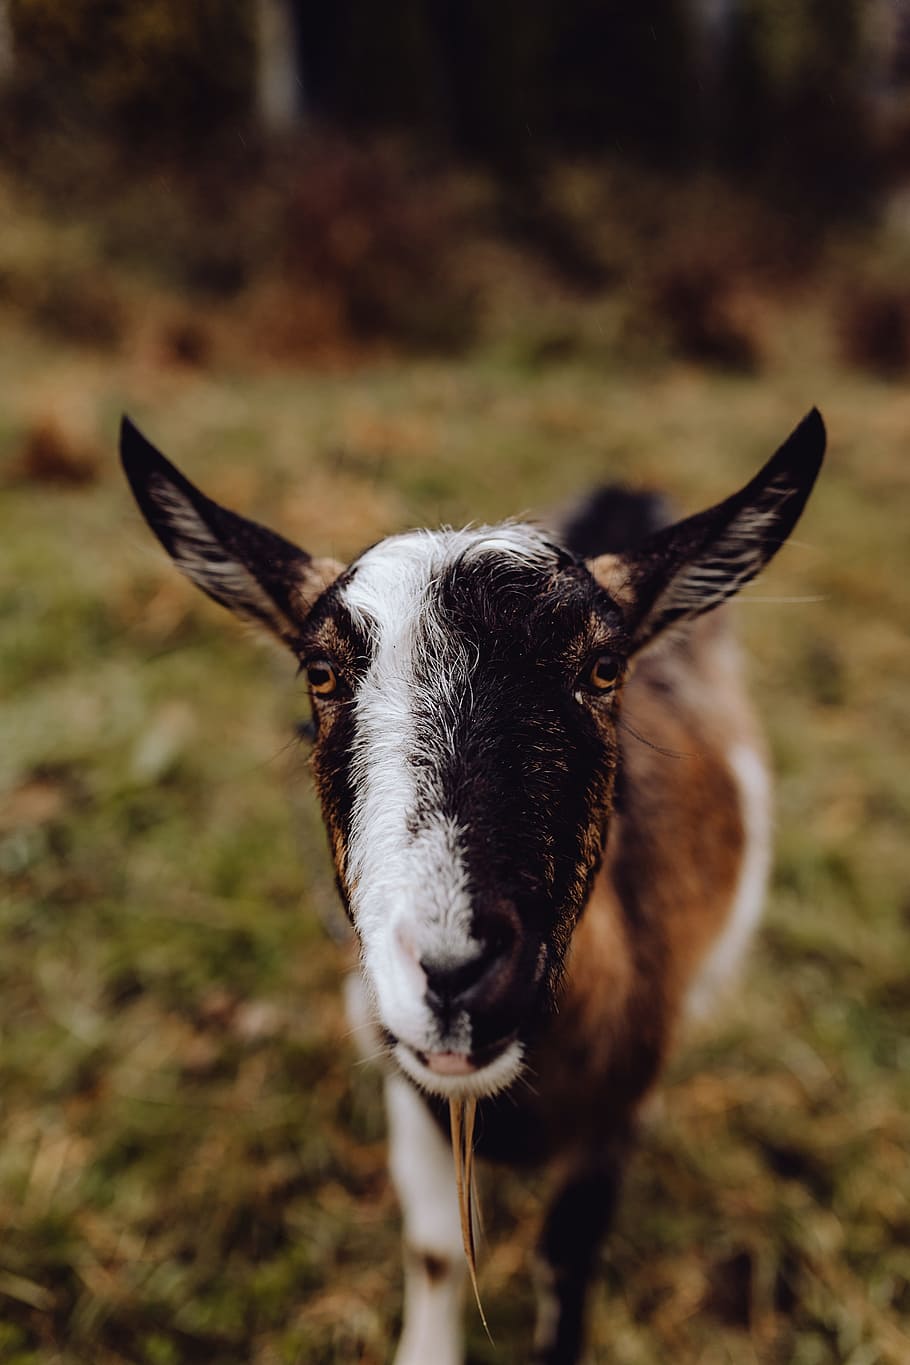 Cute Goat 1080P, 2K, 4K, 5K HD Wallpaper Free Download